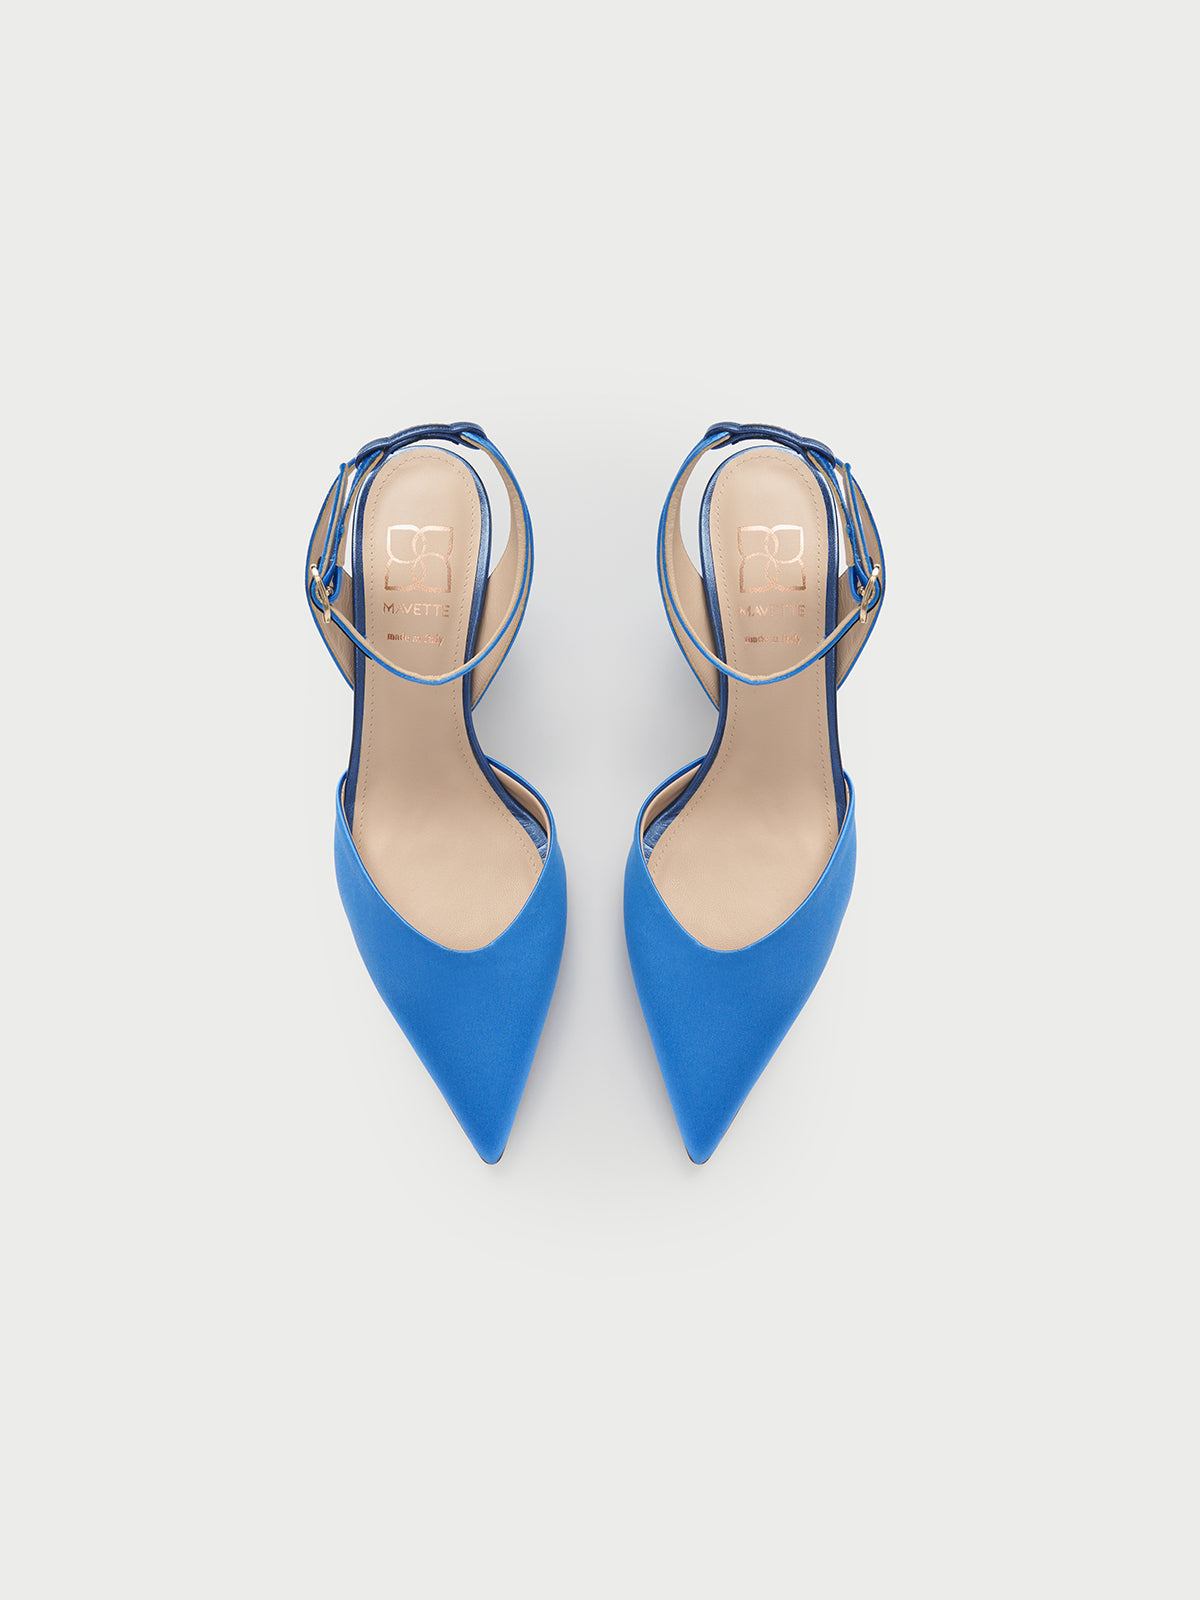 Shop Aurora Pump Blue Satin | Mavette Shoes Handmade in Italy